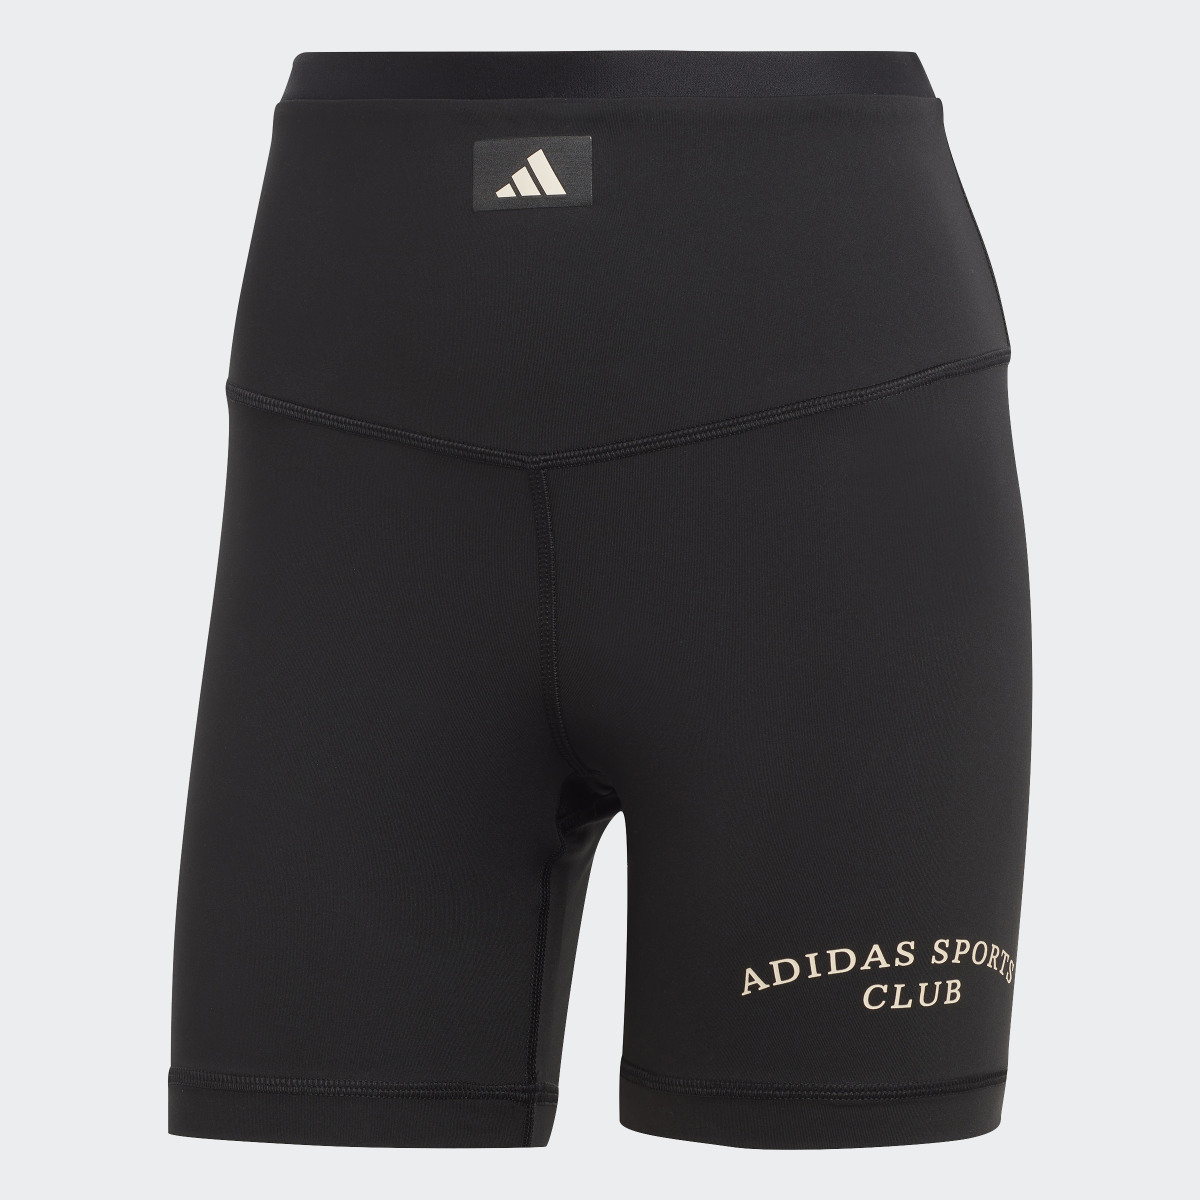 Adidas Sports Club Short High-Waist Leggings. 4